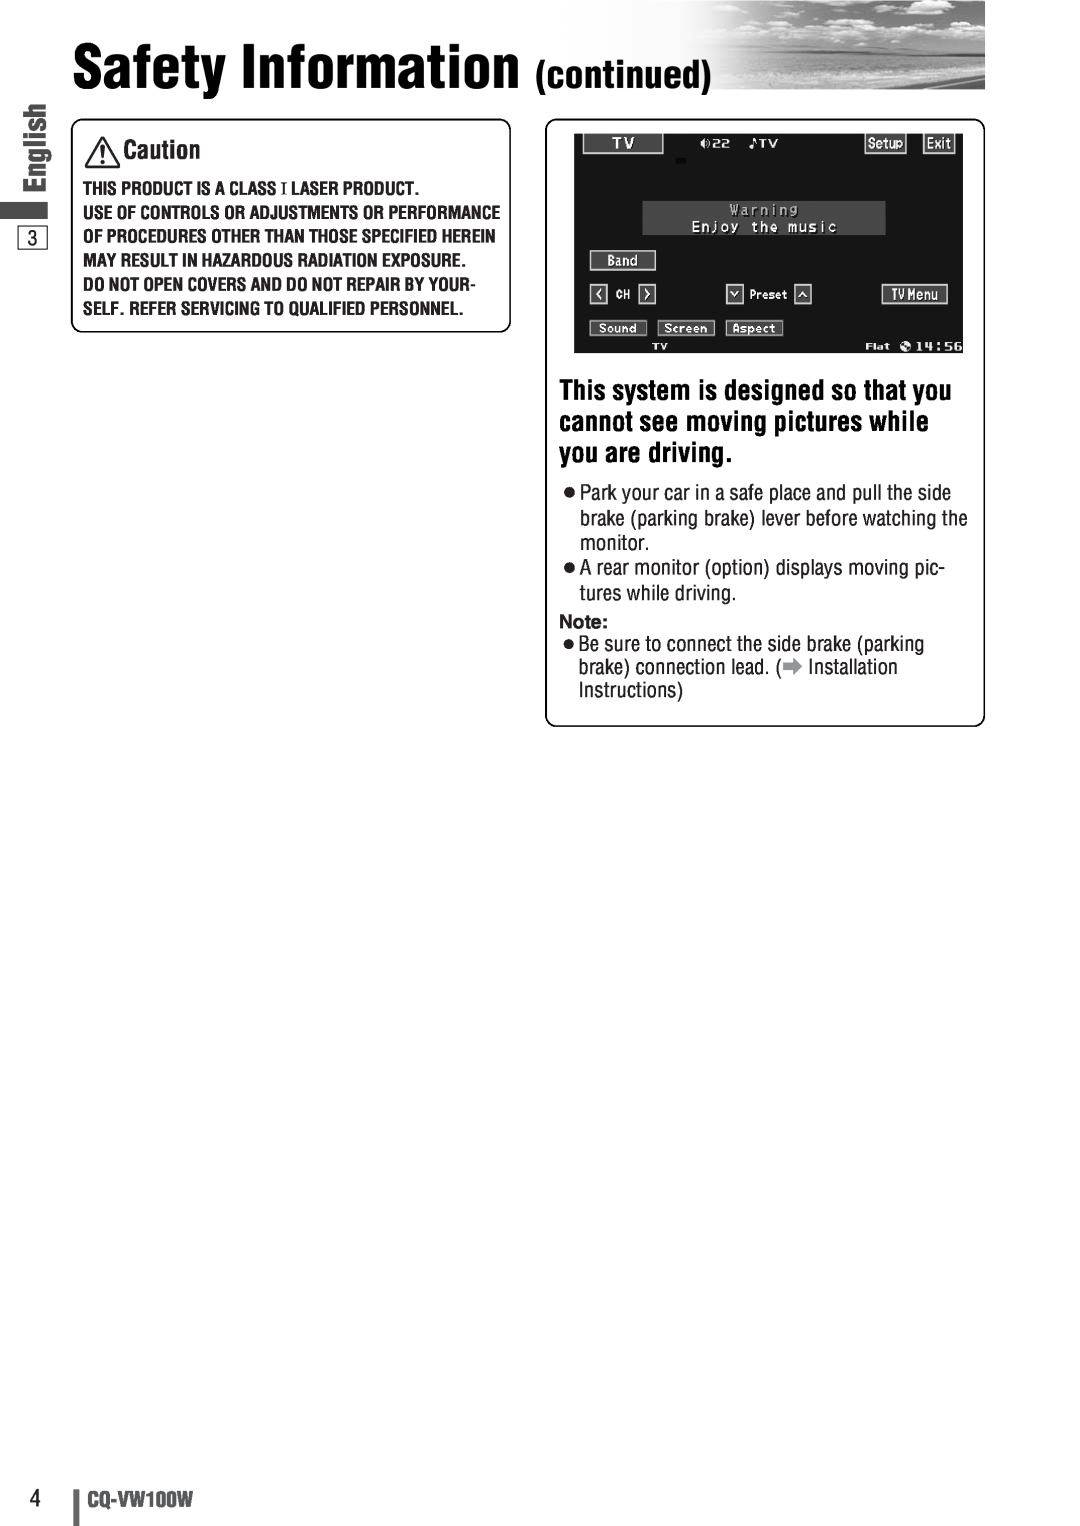 Panasonic CQ-VW100W manual Safety Information continued, English 